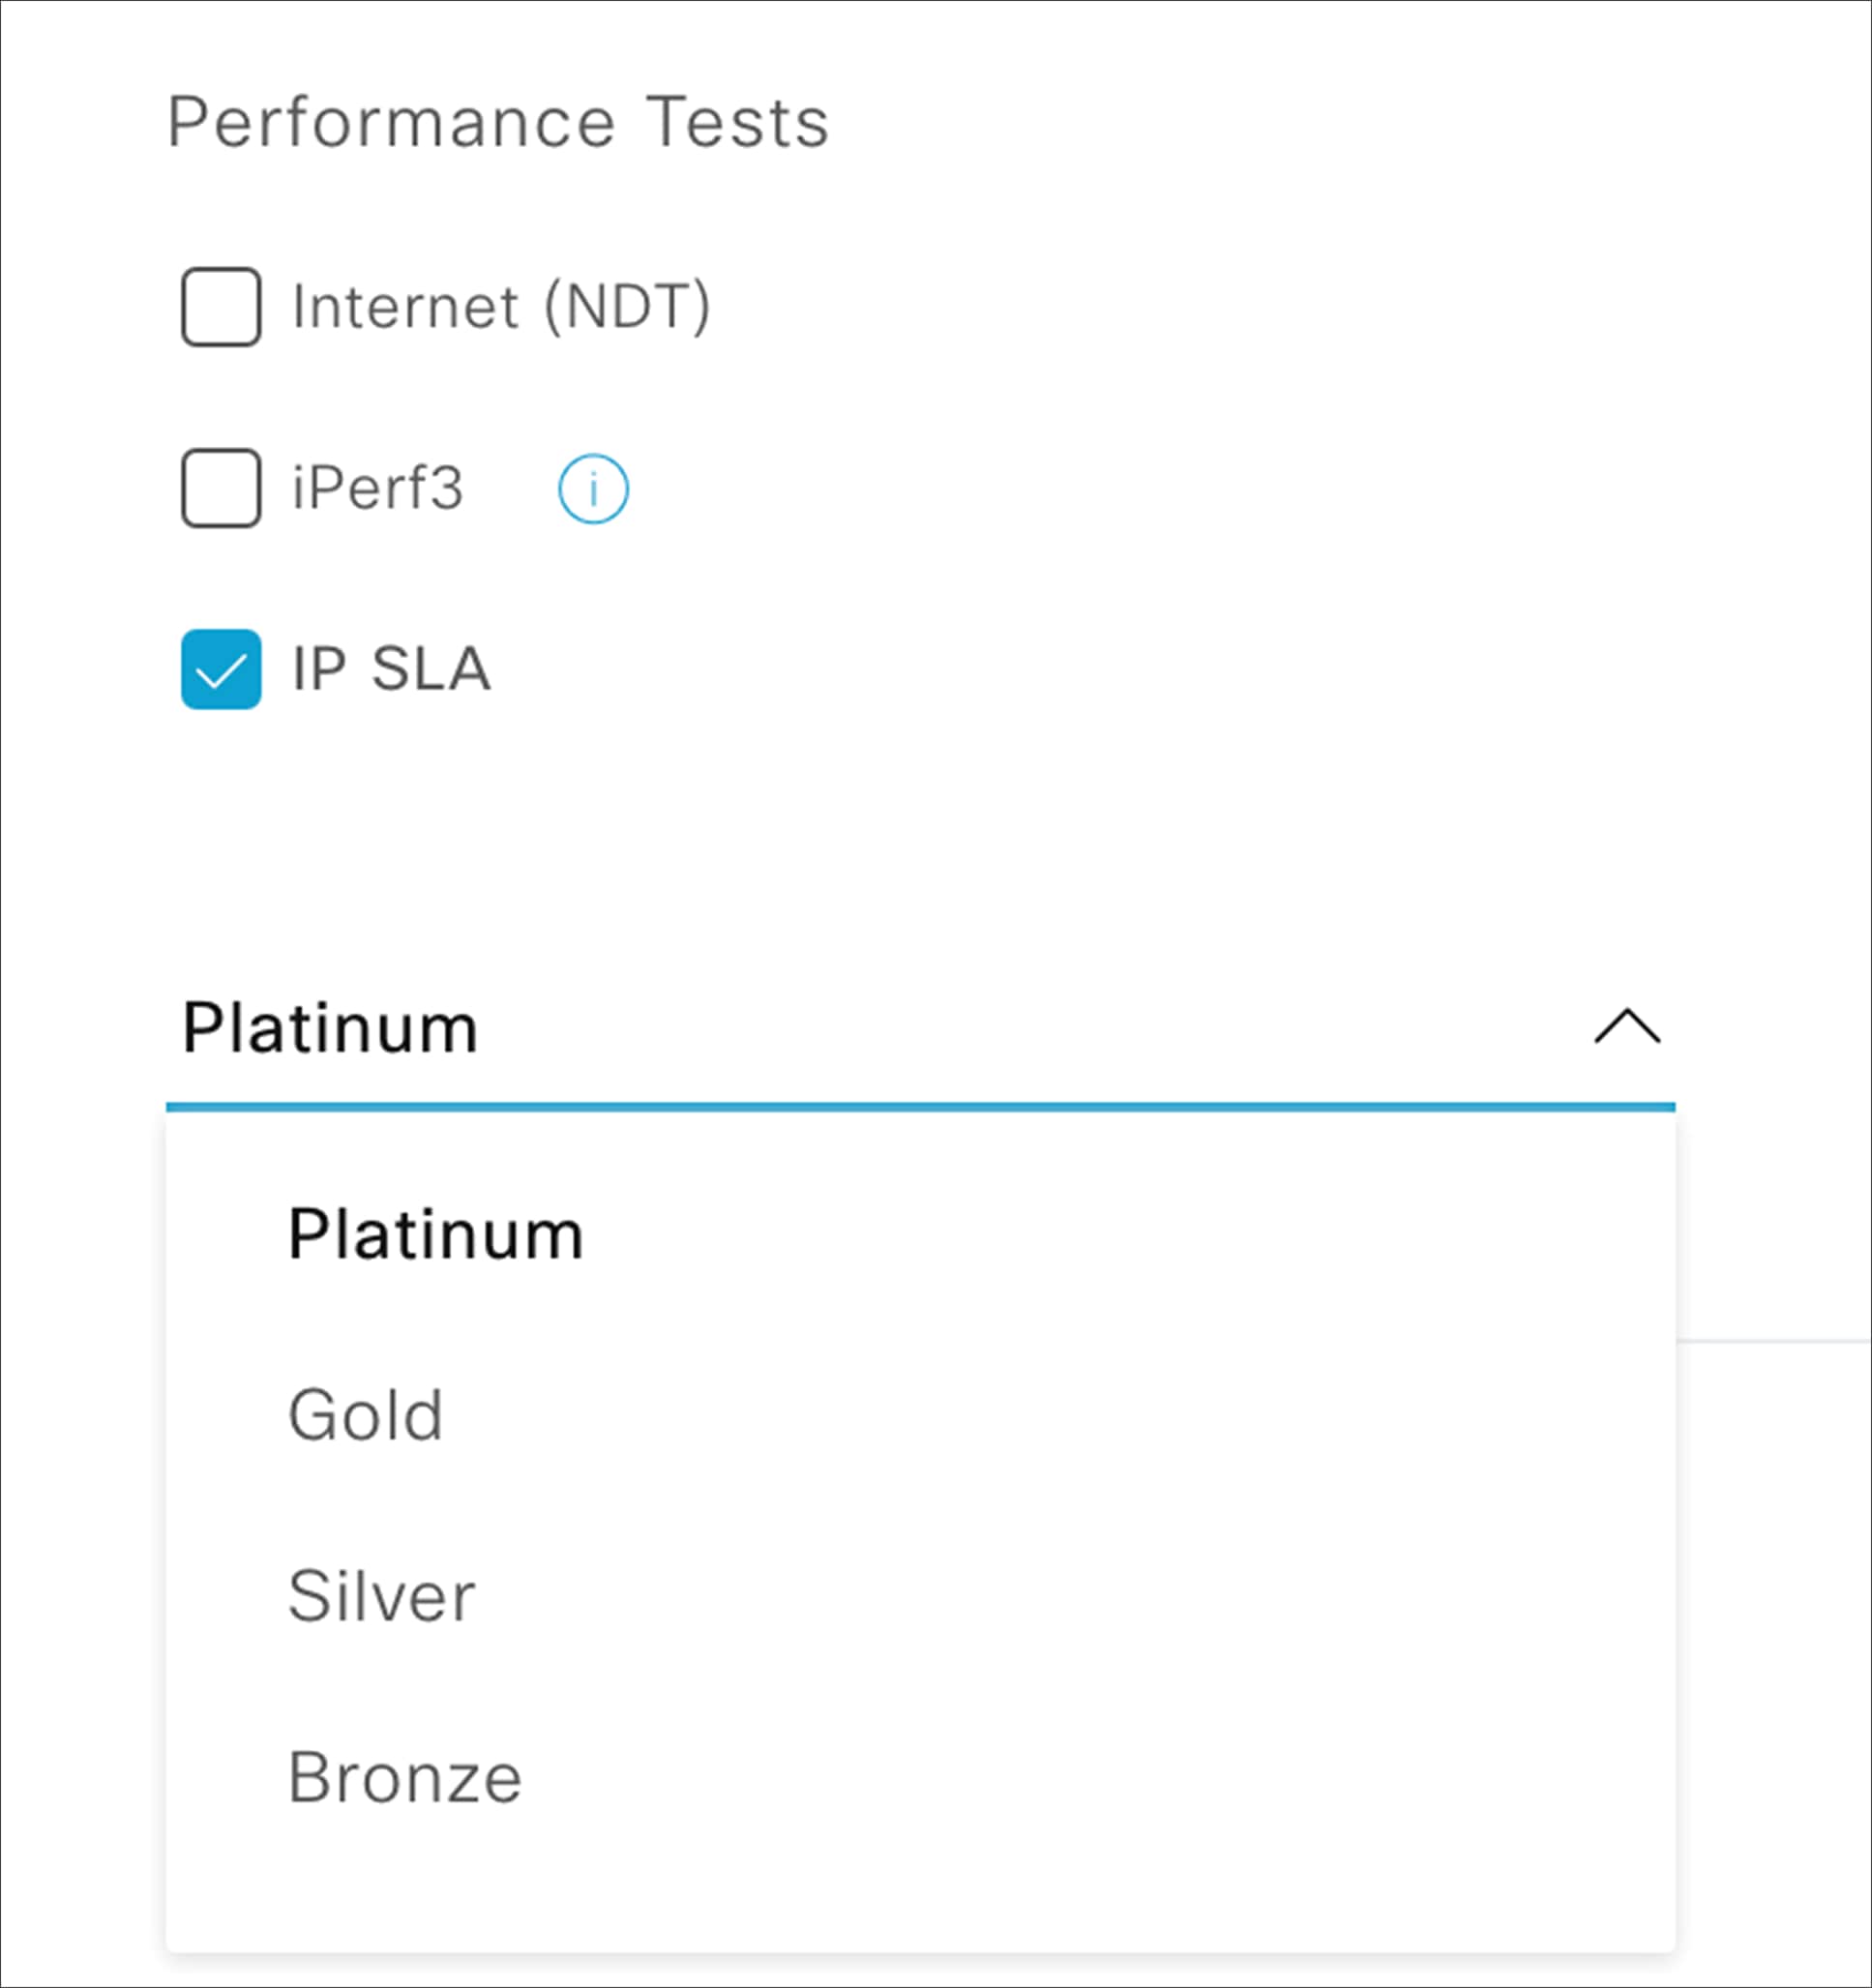 Performance Tests – iPerf3